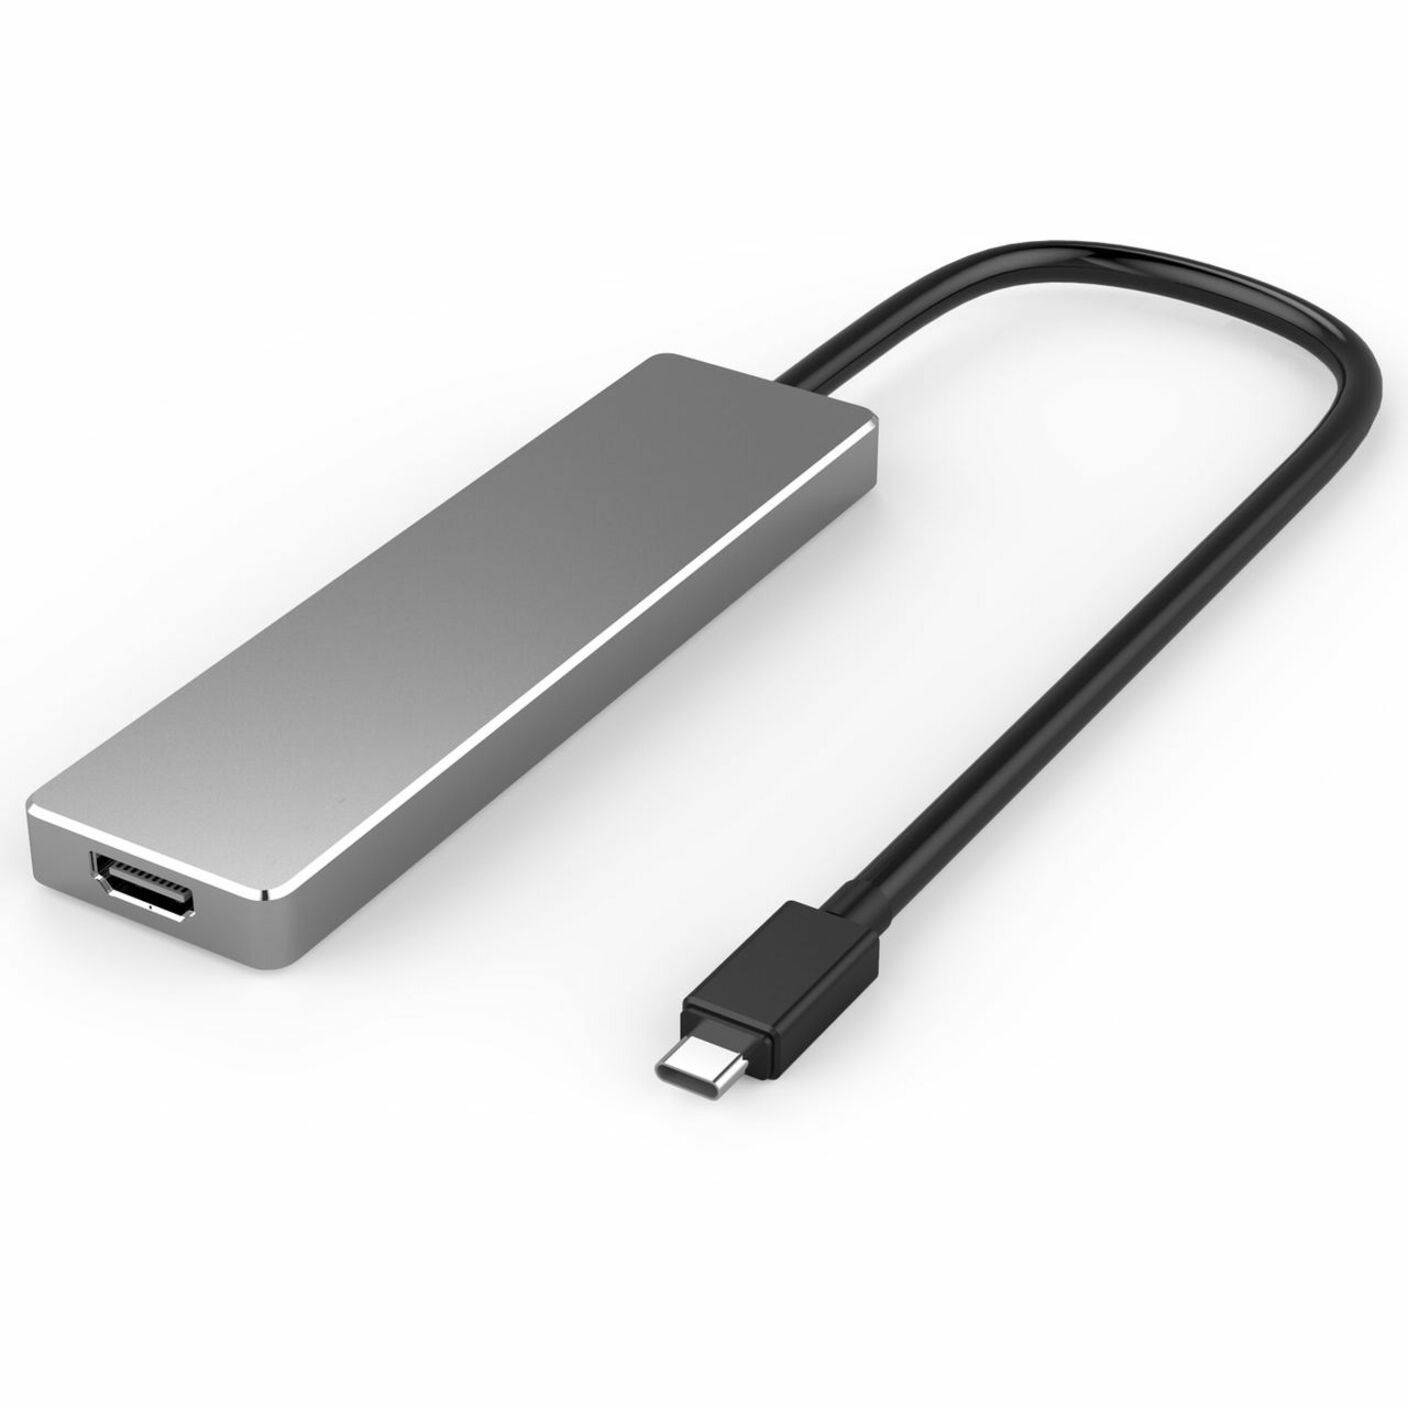 4XEM 4XUHP3407 USB-C Travel Mini Dock, HDMI, USB Type-C, 2 USB 3.0 Ports, 1 USB 3.1 Gen 1 Type-C Port